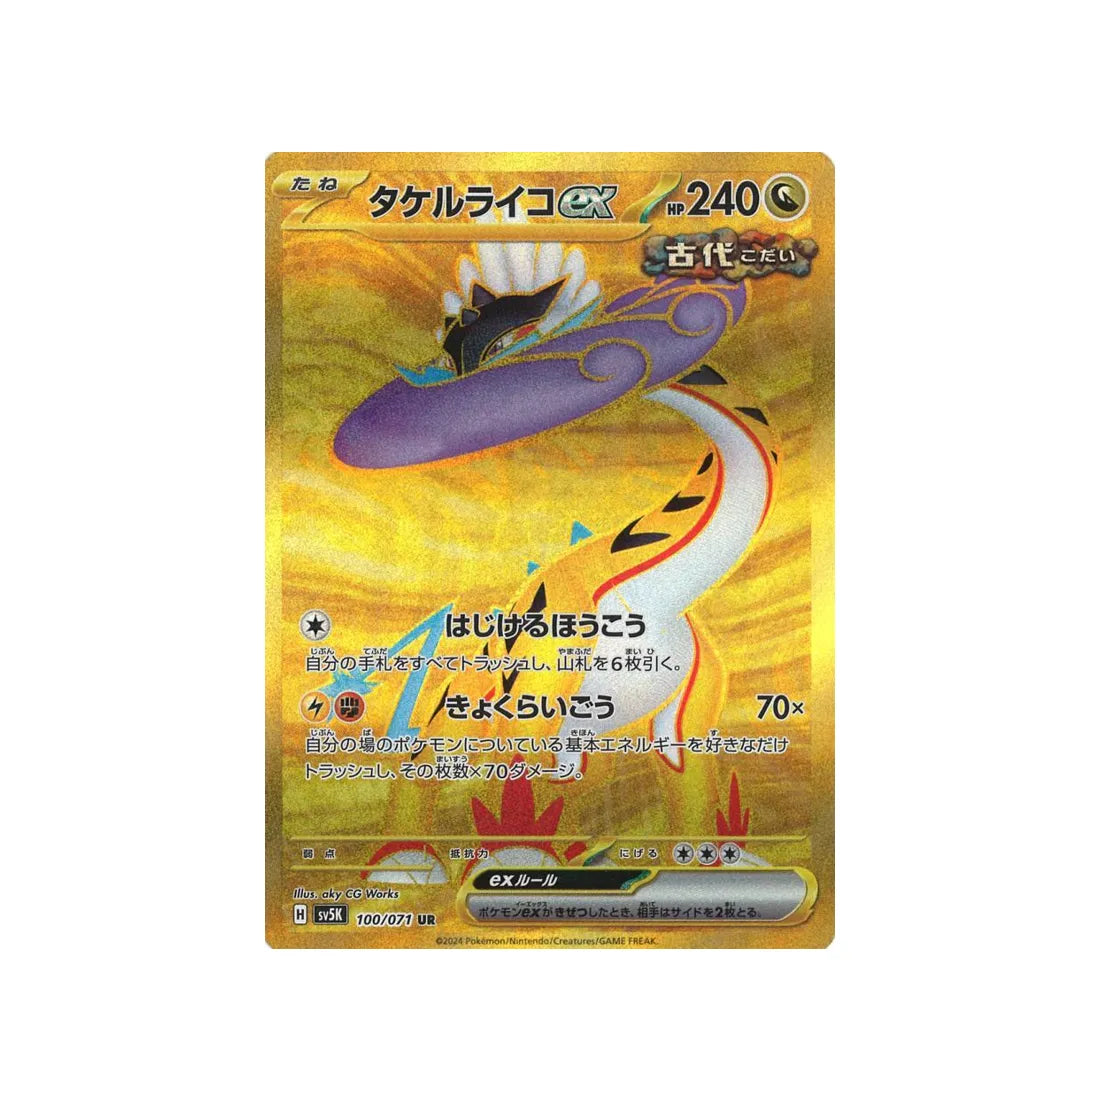 Pokémon card Wild Force SV5K 100/071: Ire-Lightning EX 